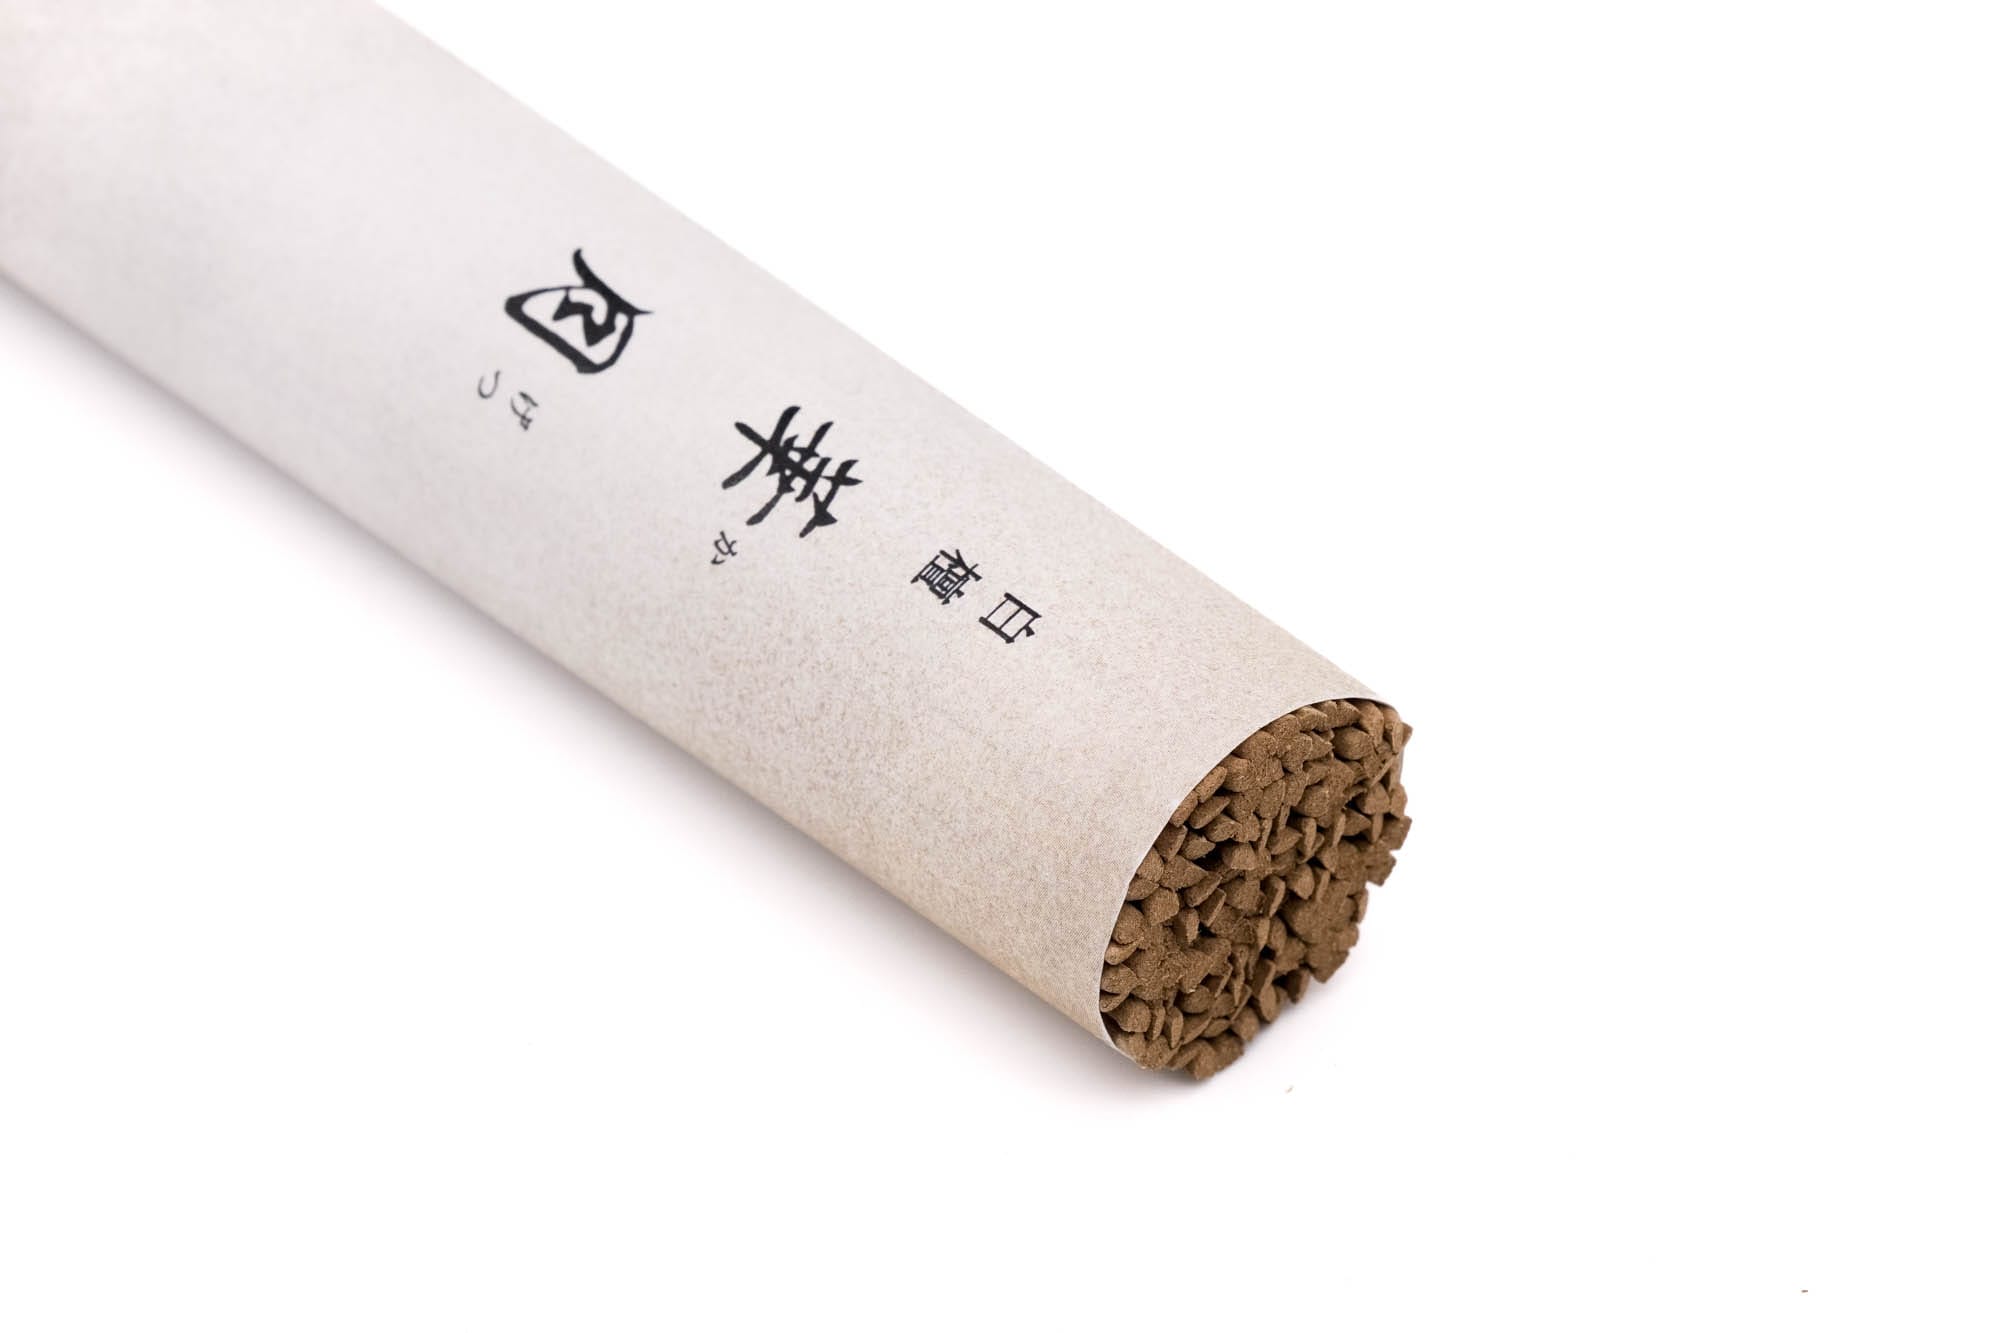 山田松 Yamadamatsu - Kagetsu Sandalwood Incense Sticks